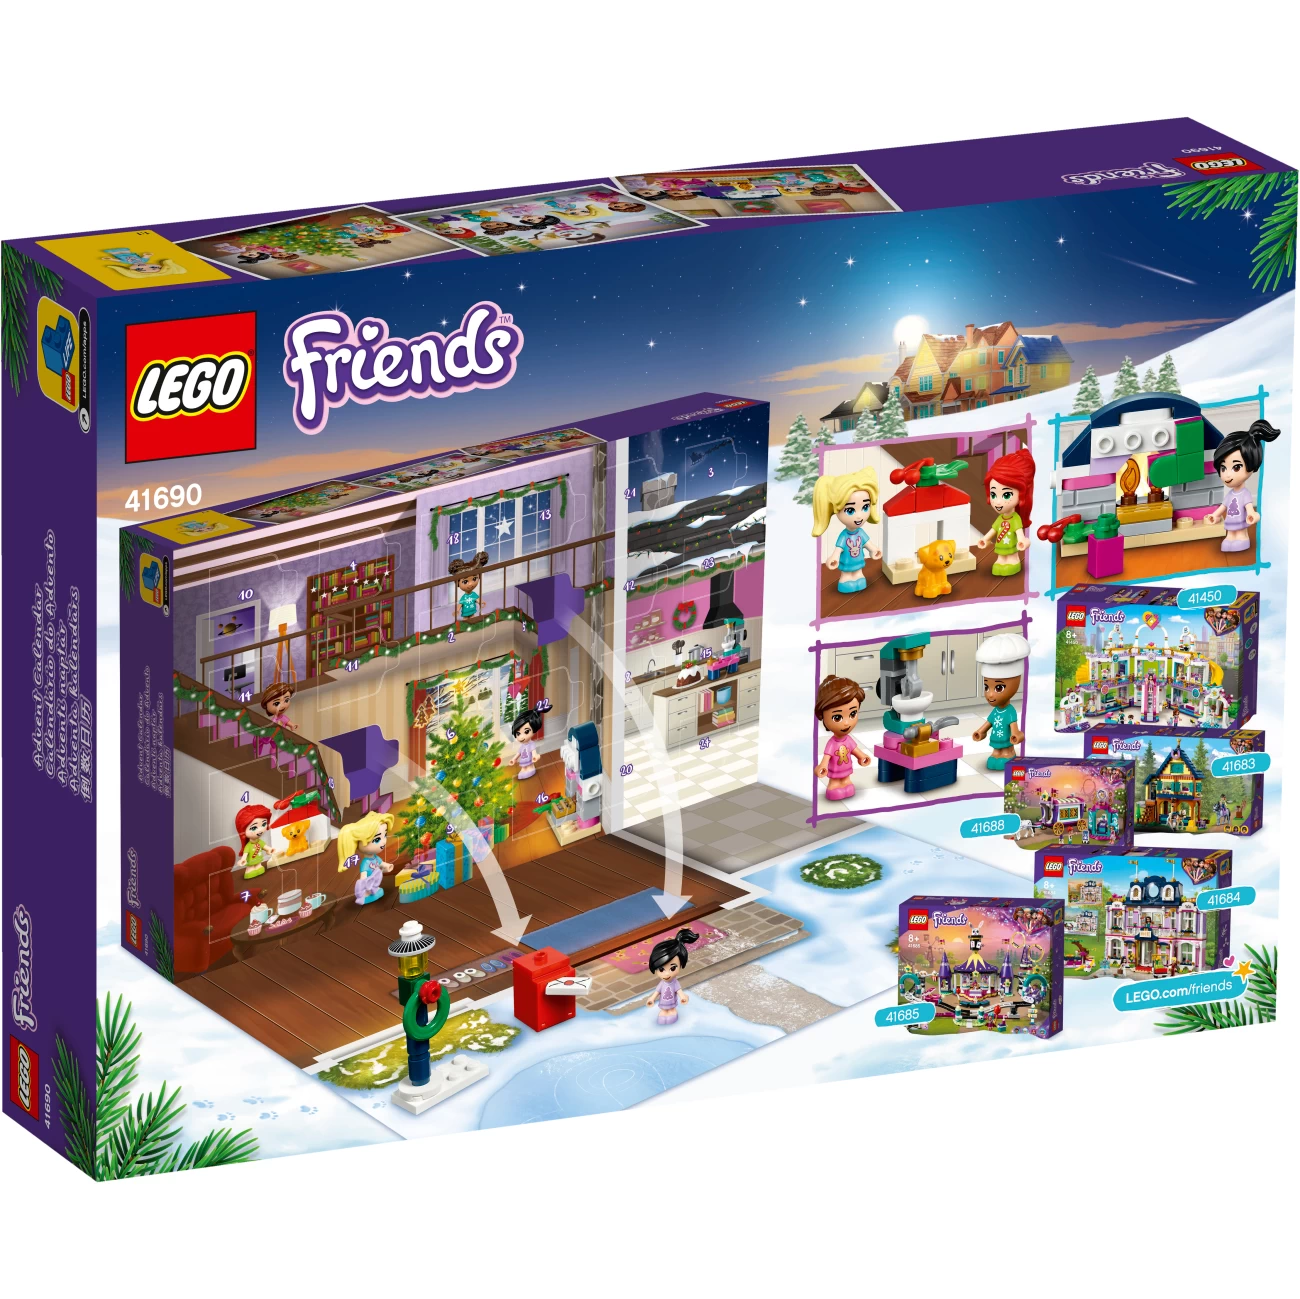 LEGO Friends - Adventskalender 2021 (41690)